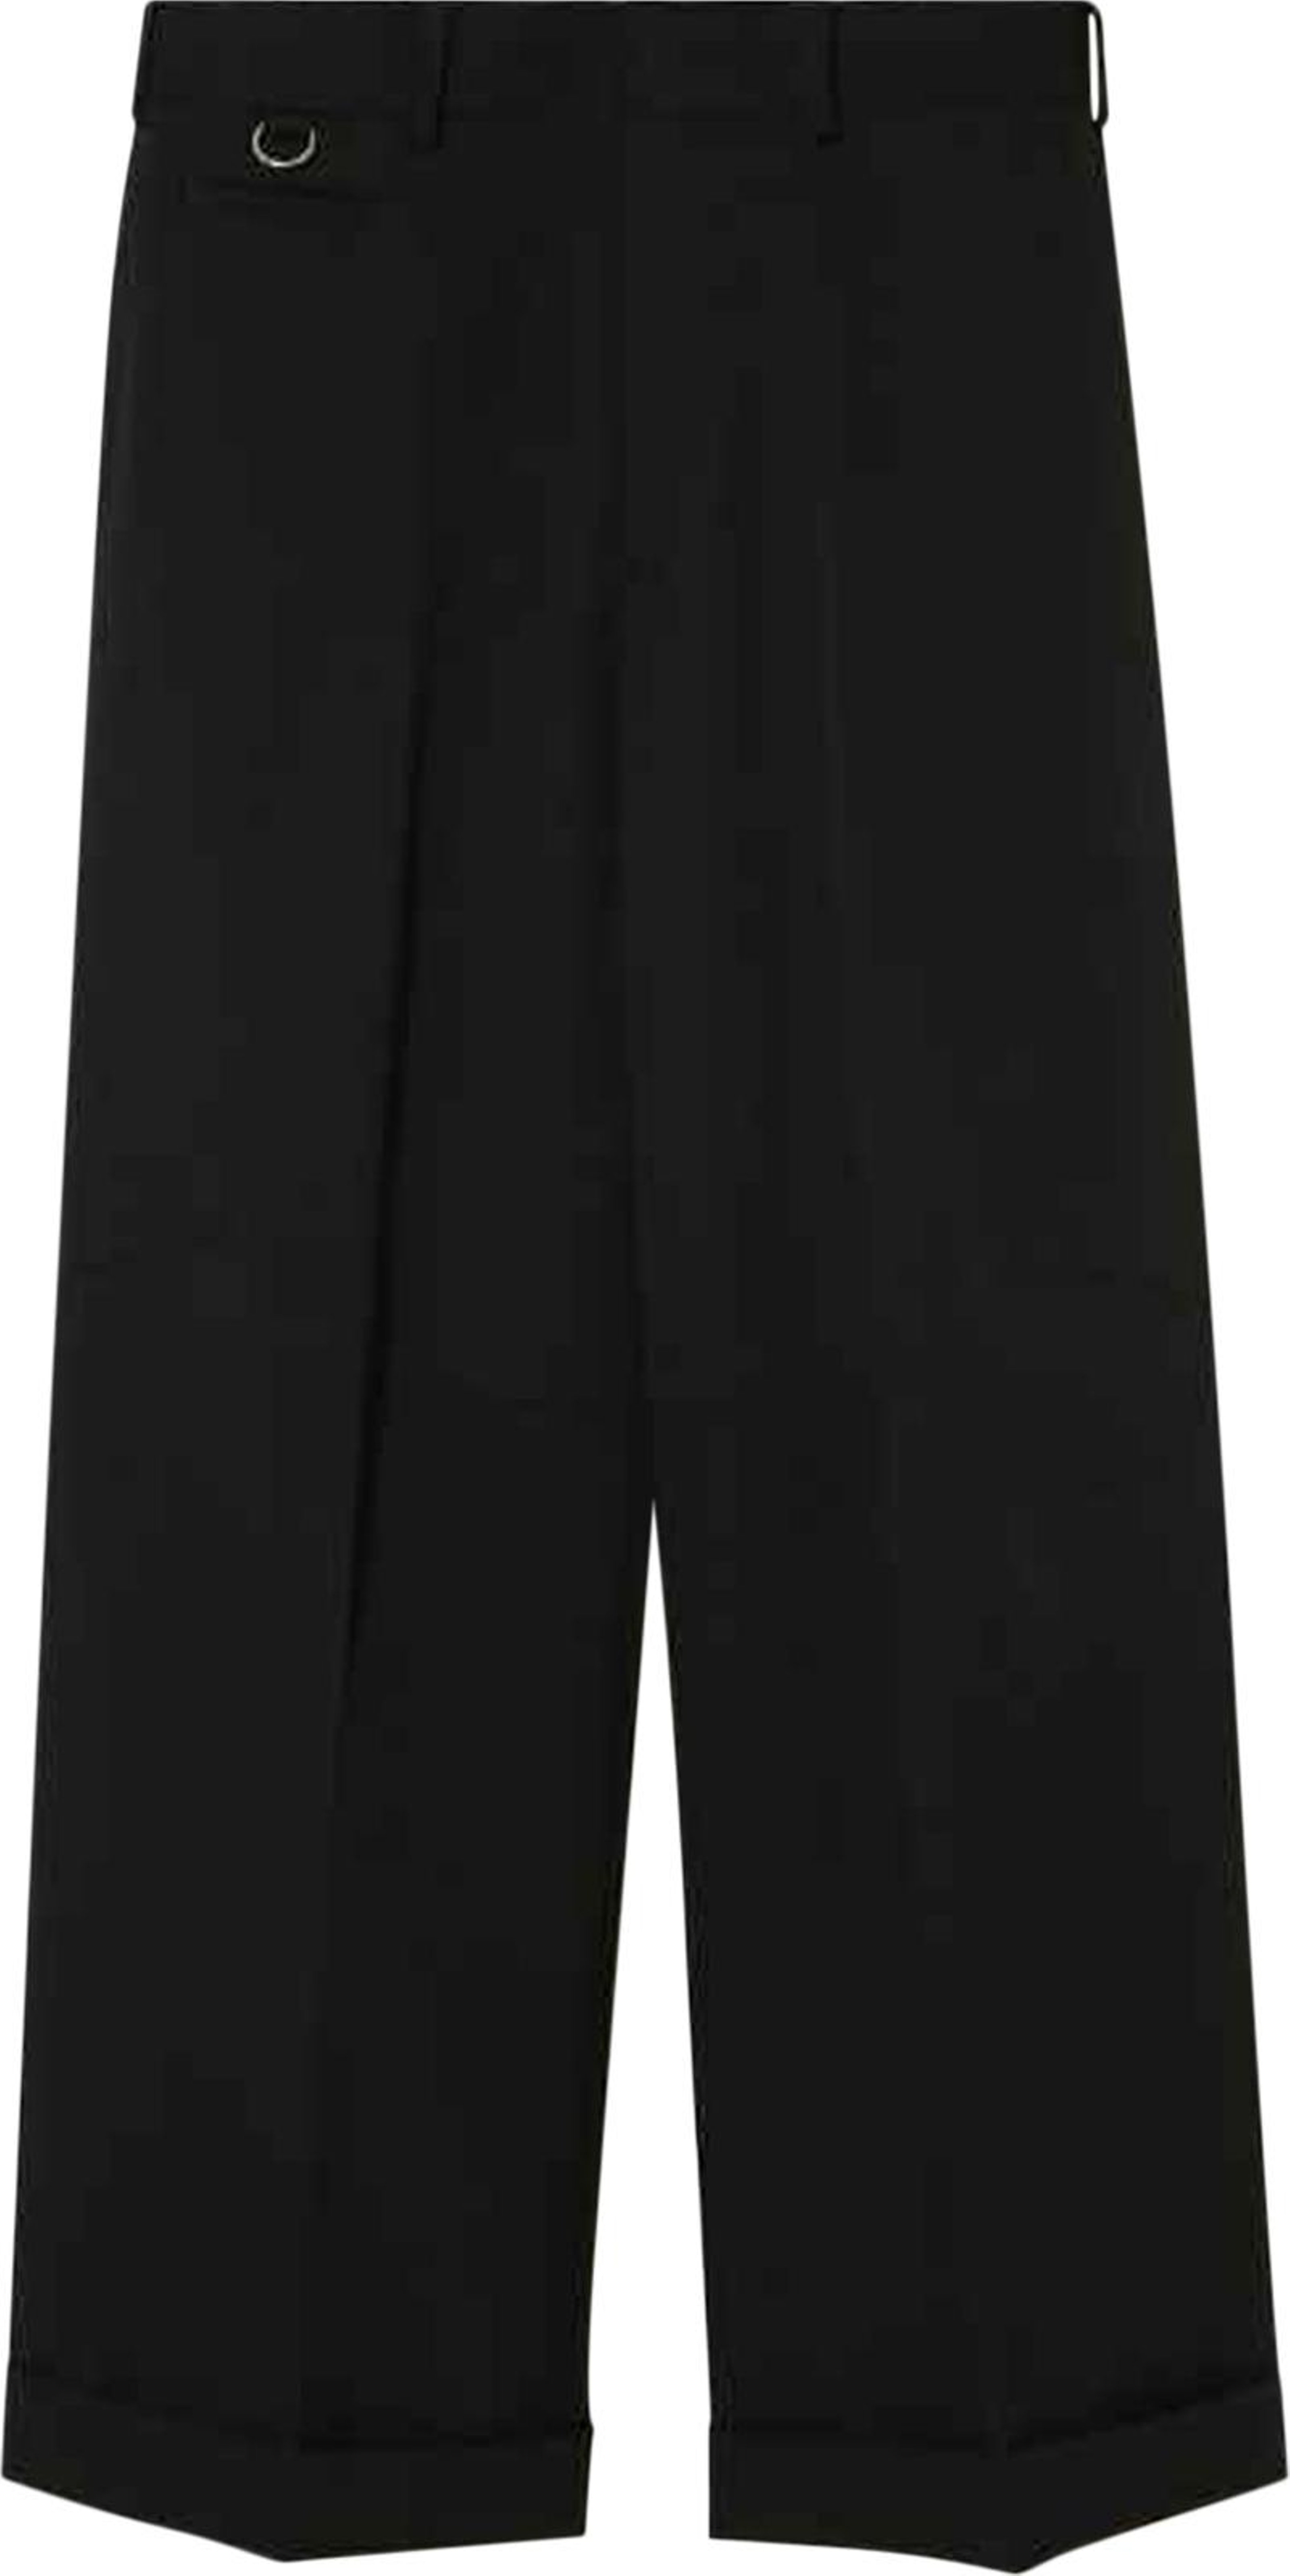 Buy Undercover D Ring Pants 'Black' - UC2C4502 BLAC | GOAT